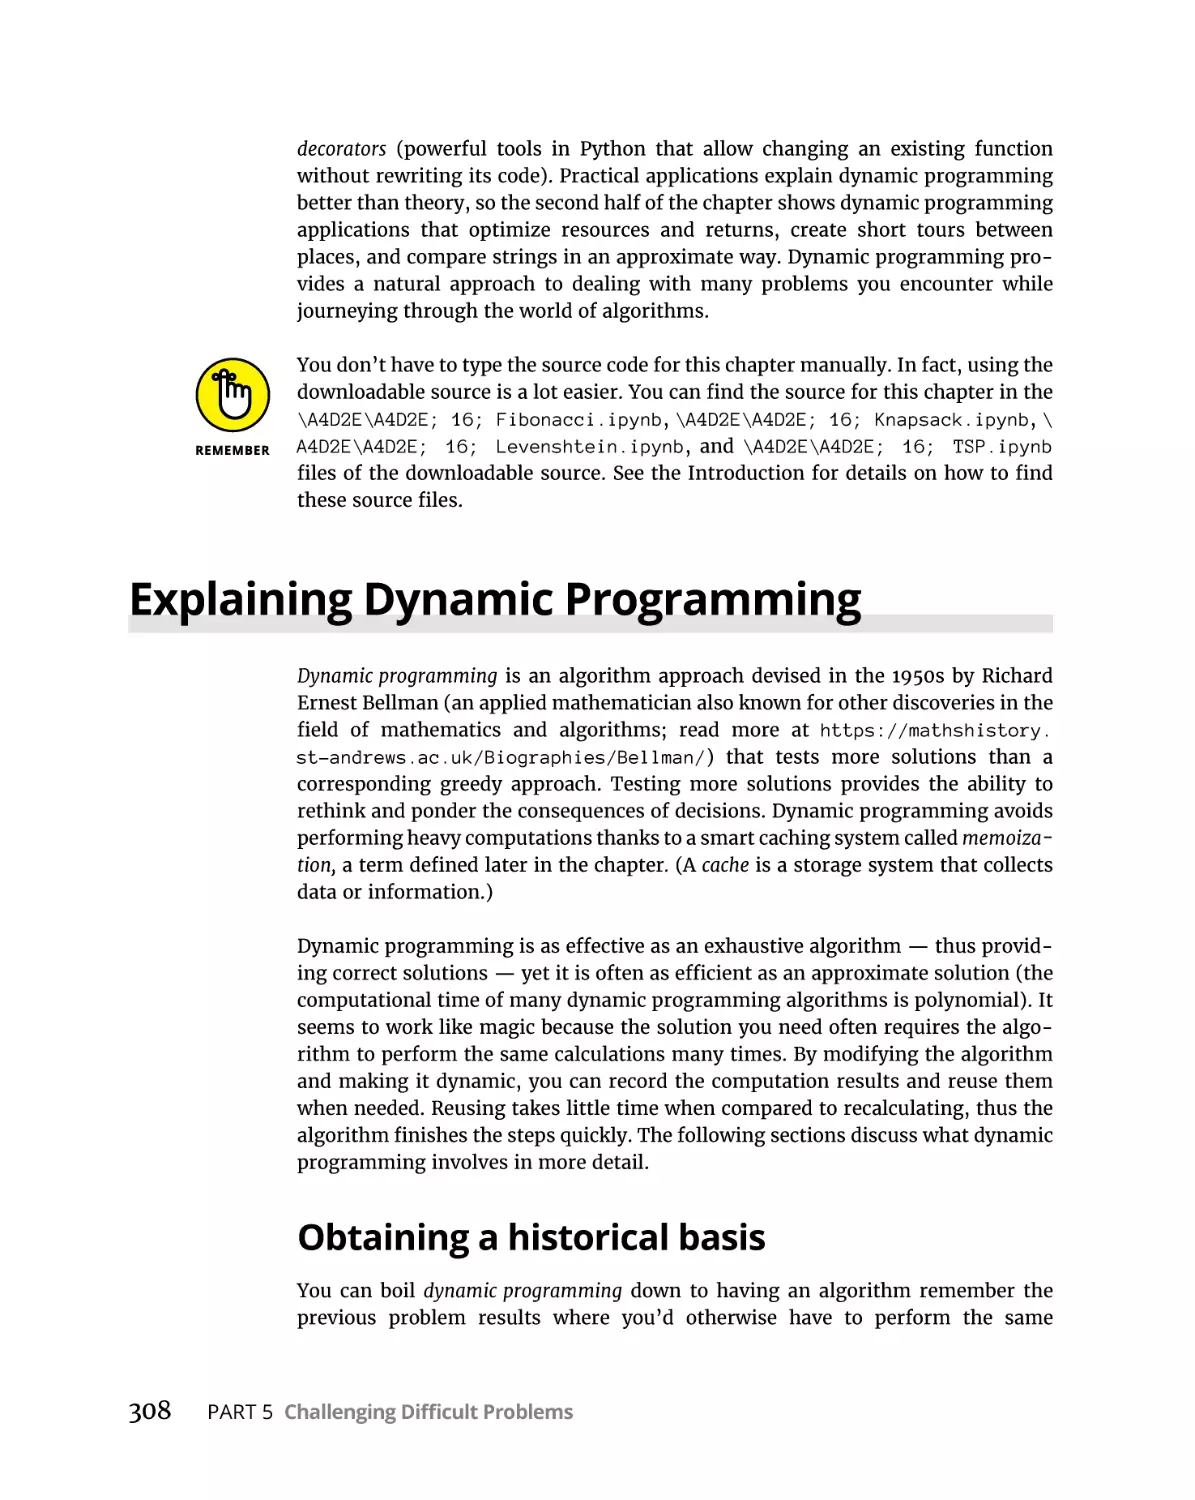 Explaining Dynamic Programming
Obtaining a historical basis